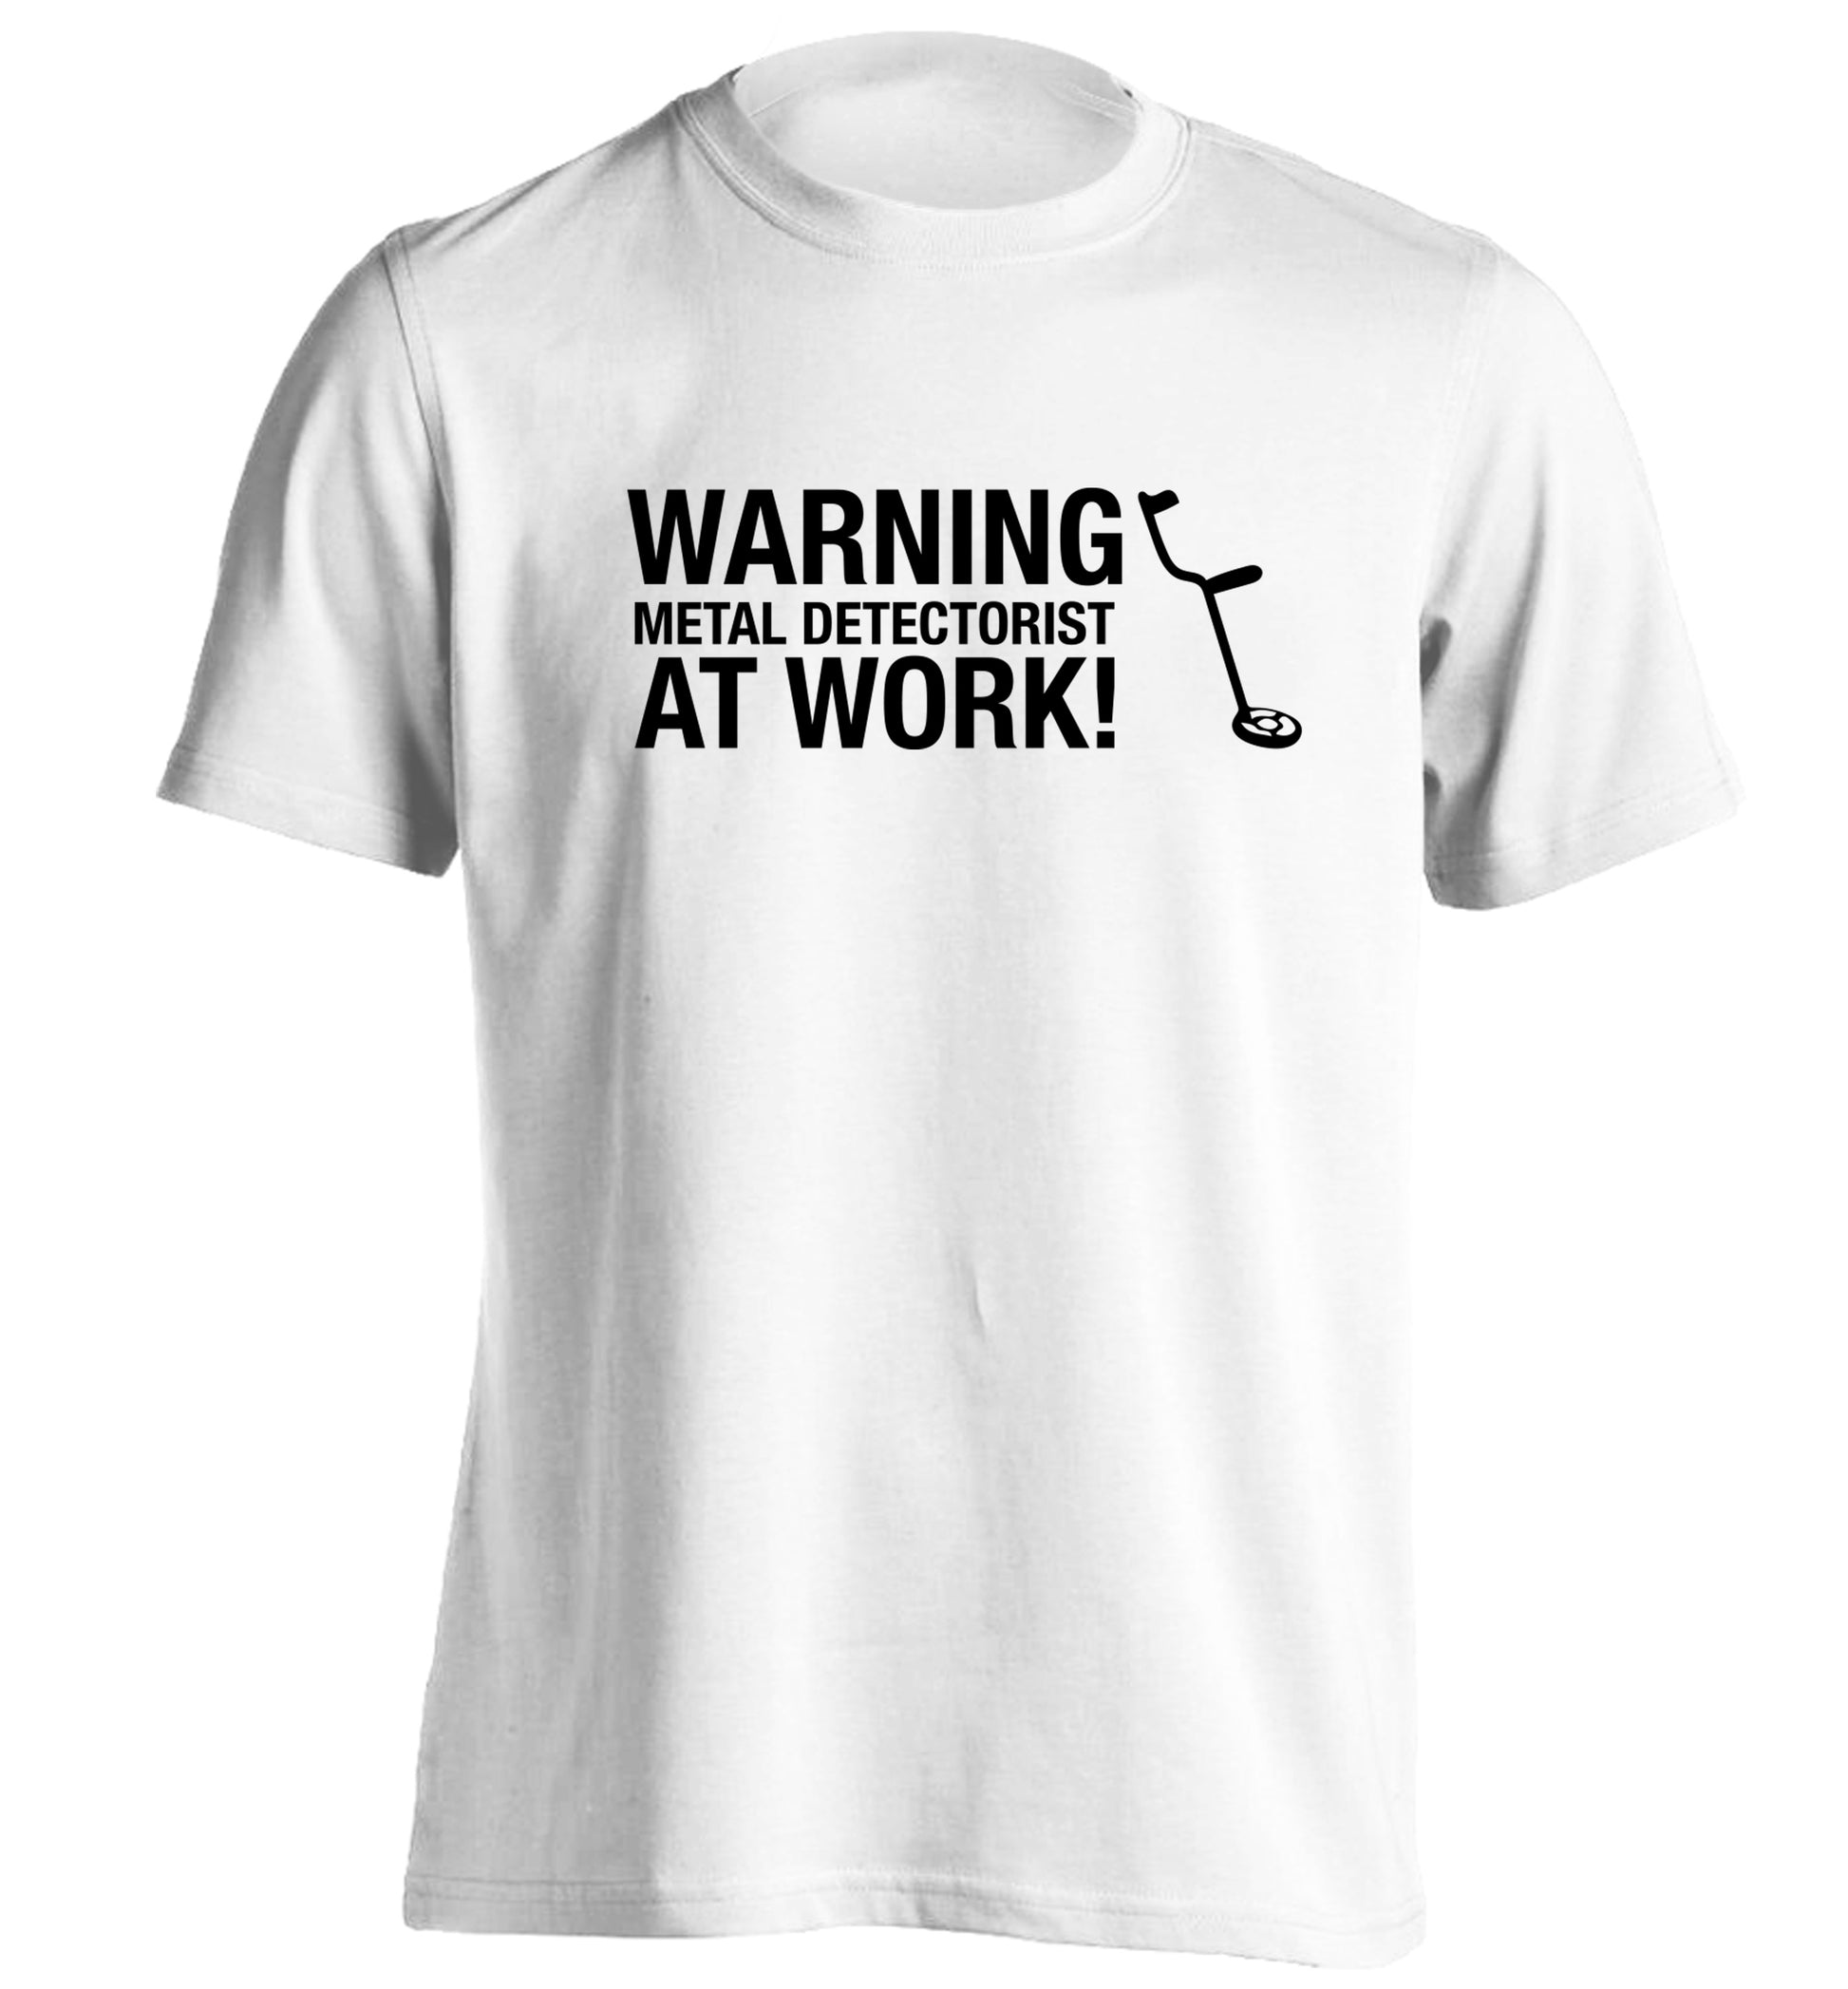 Warning metal detectorist at work! adults unisex white Tshirt 2XL